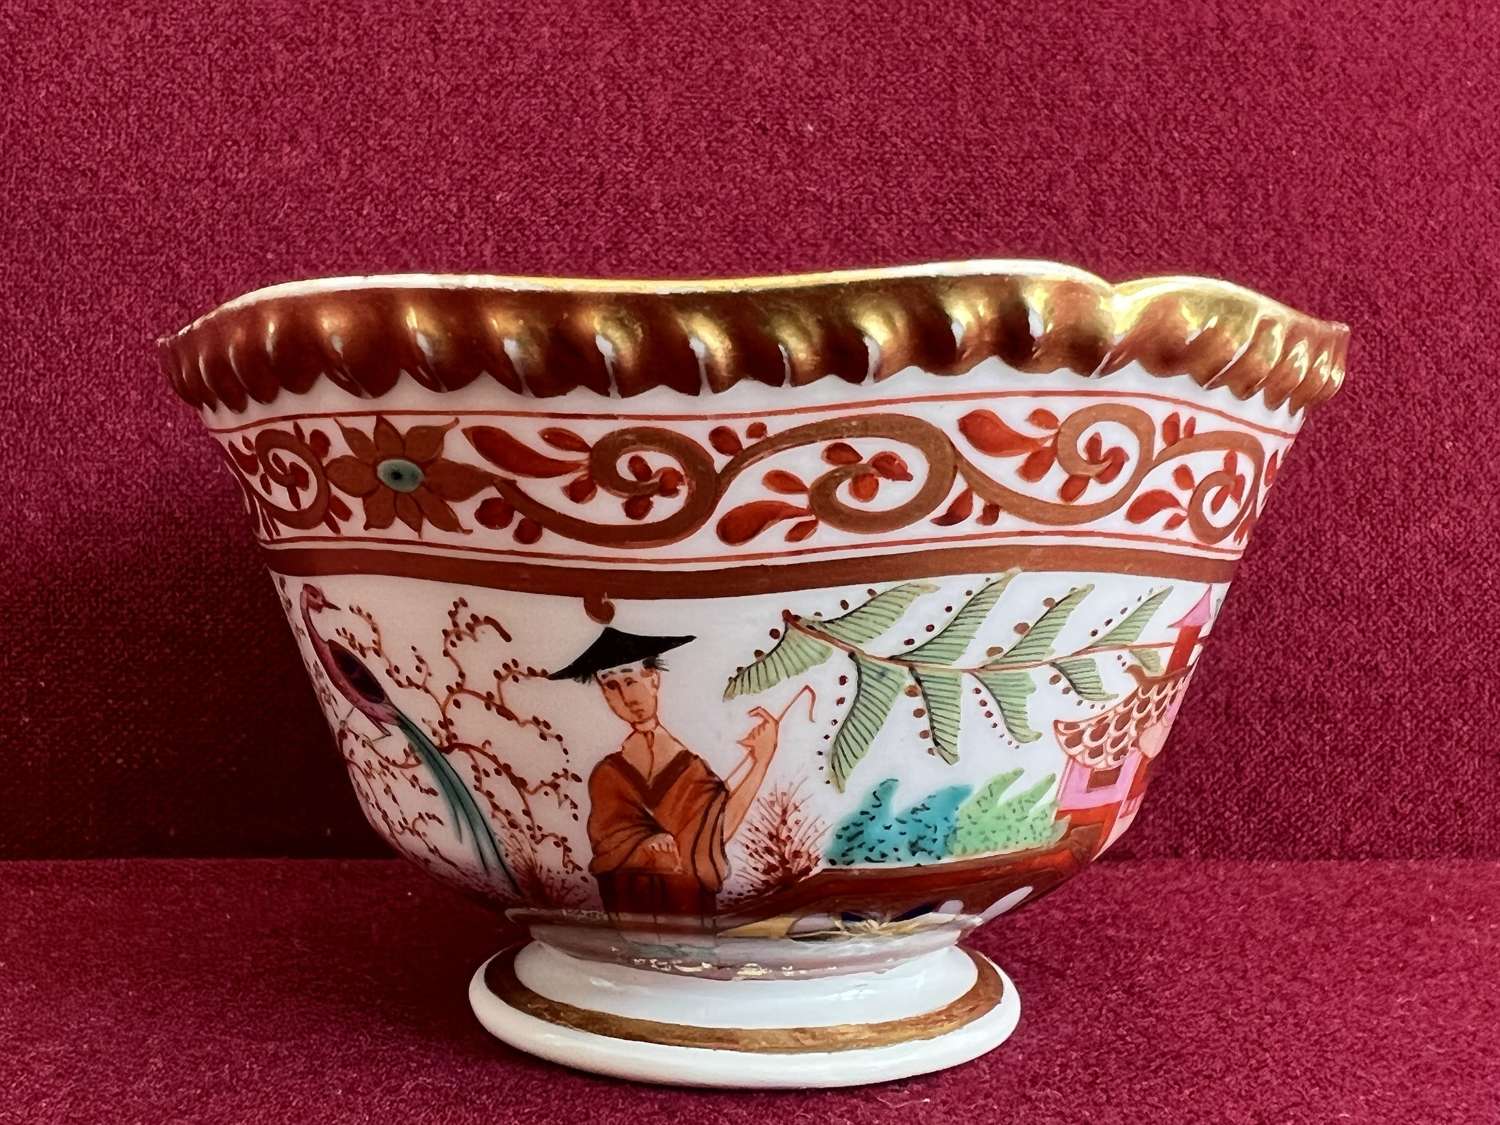 A Flight Barr & Barr Worcester Porcelain Tea Cup c.1815-1820